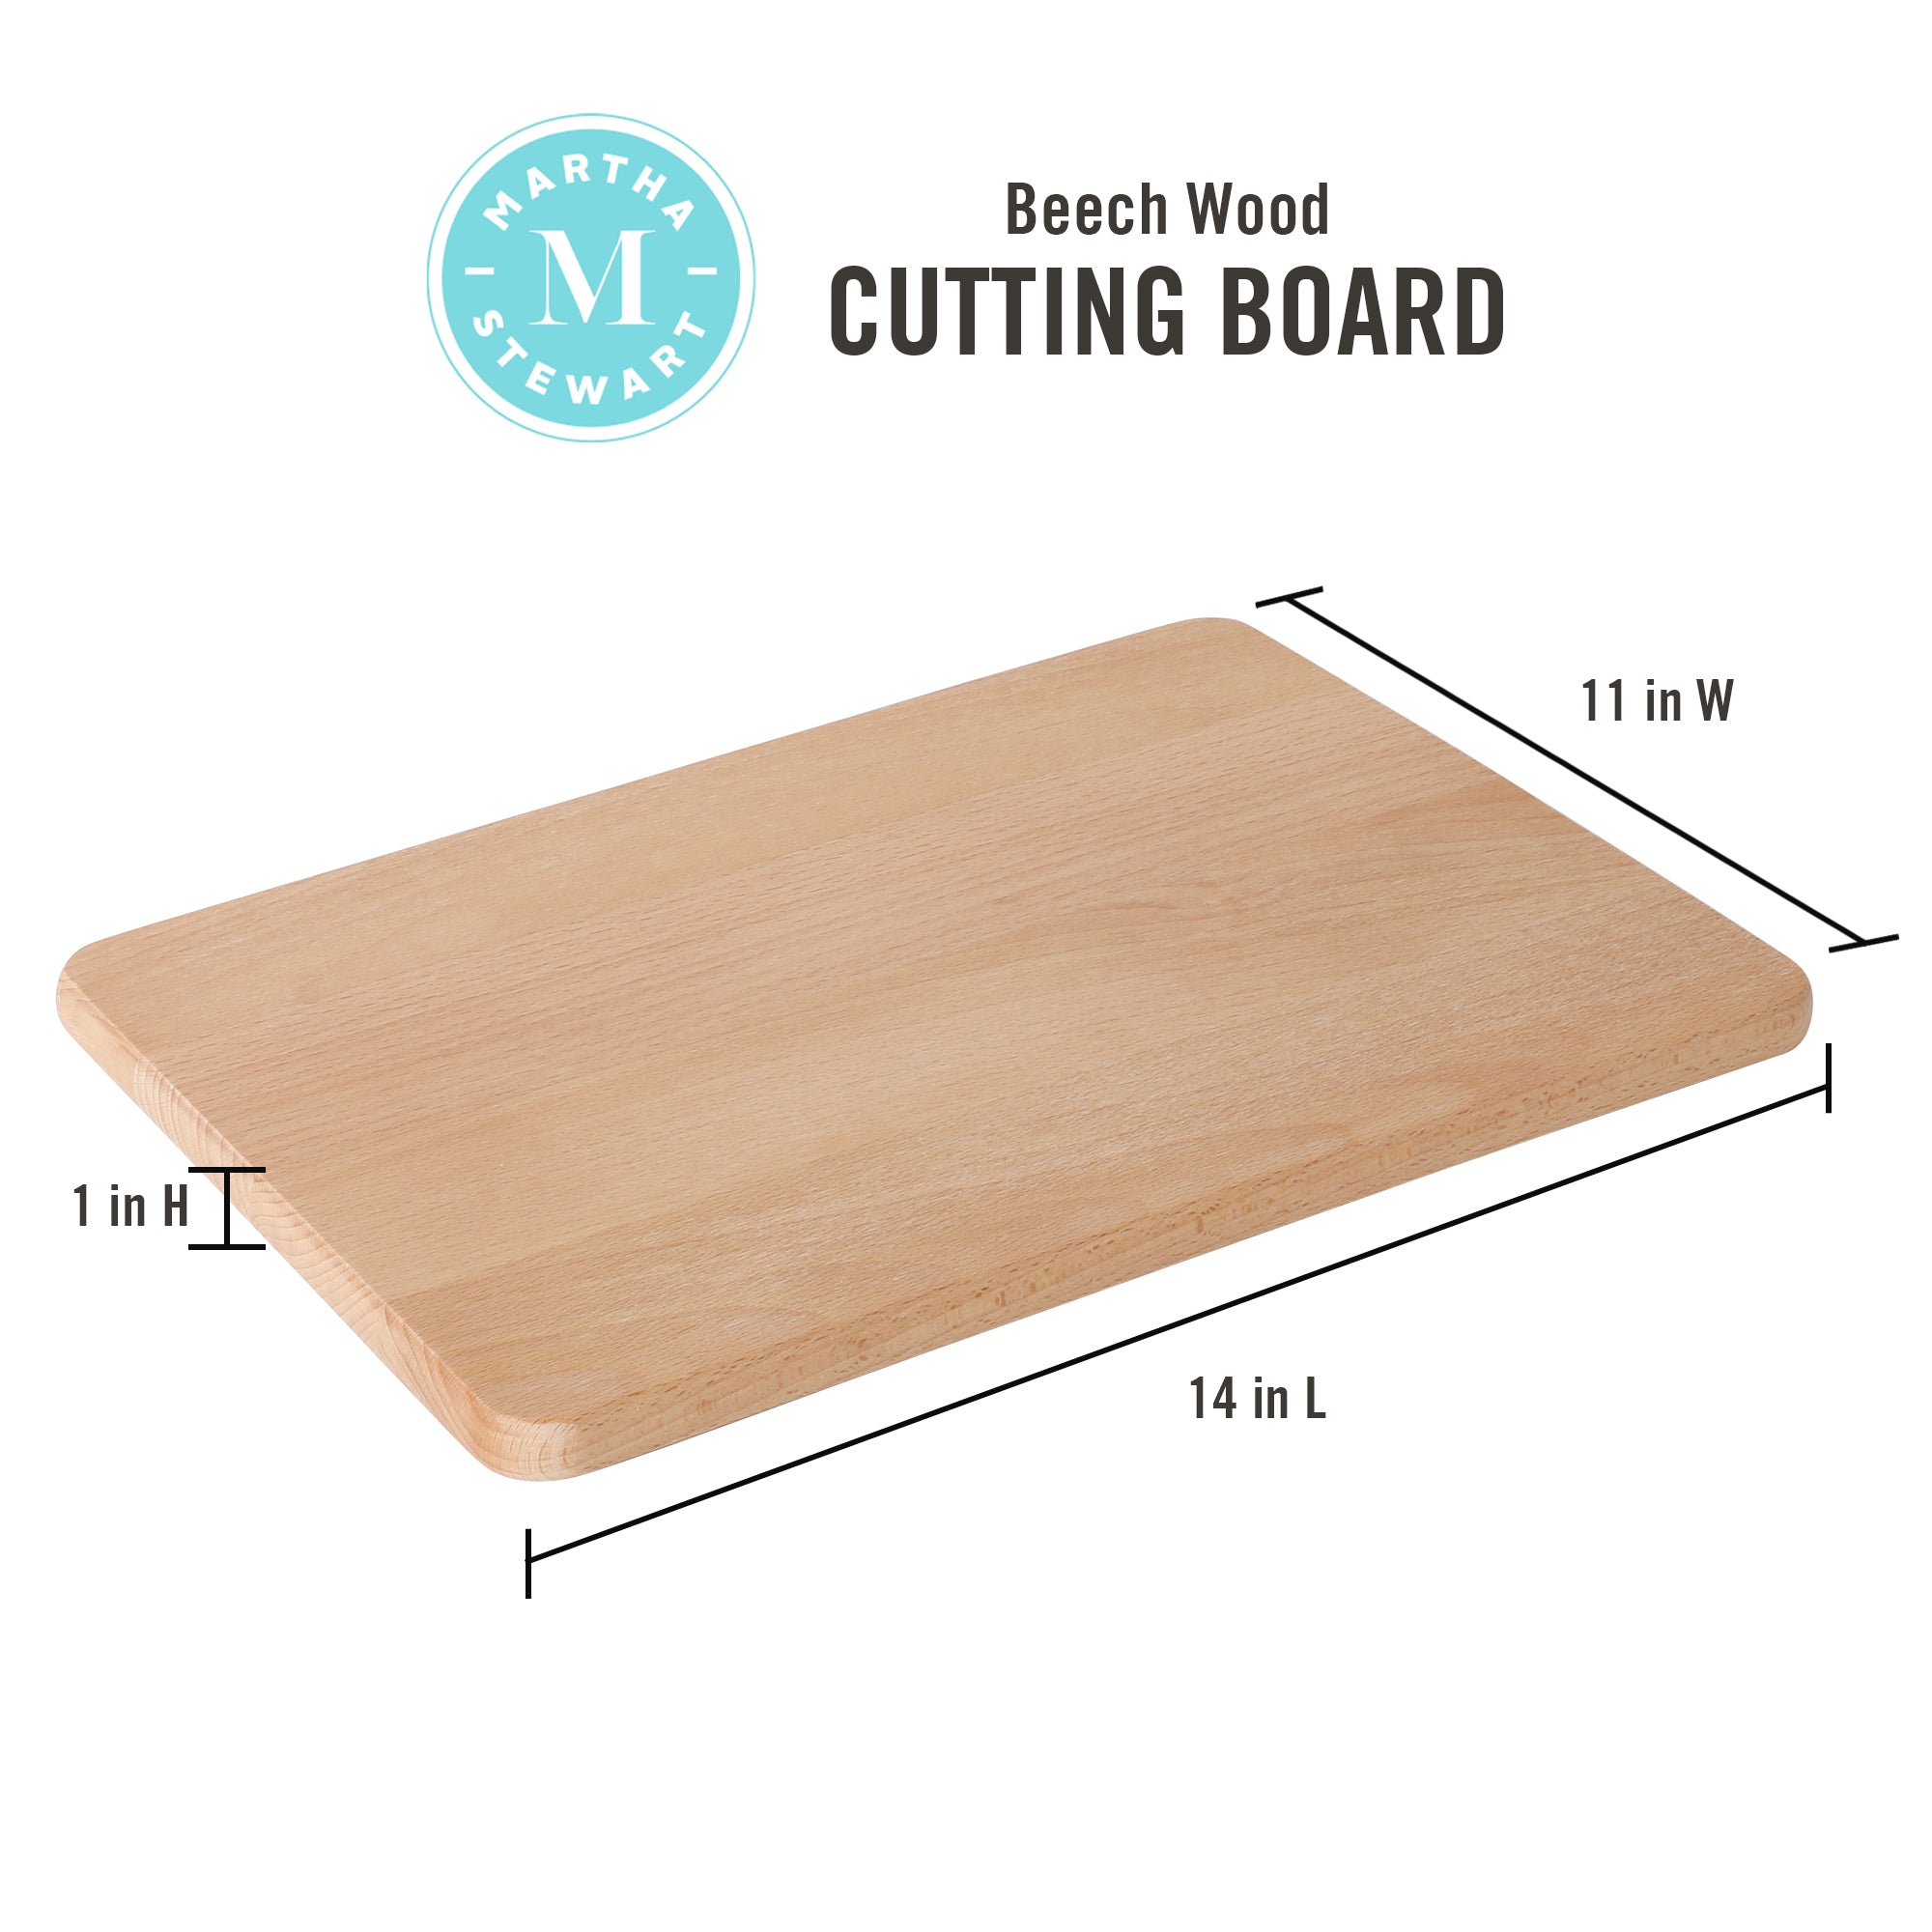 14 in. x 11 in. Beech Wood Cutting Board by Martha Stewart Today at Fleet  Farm